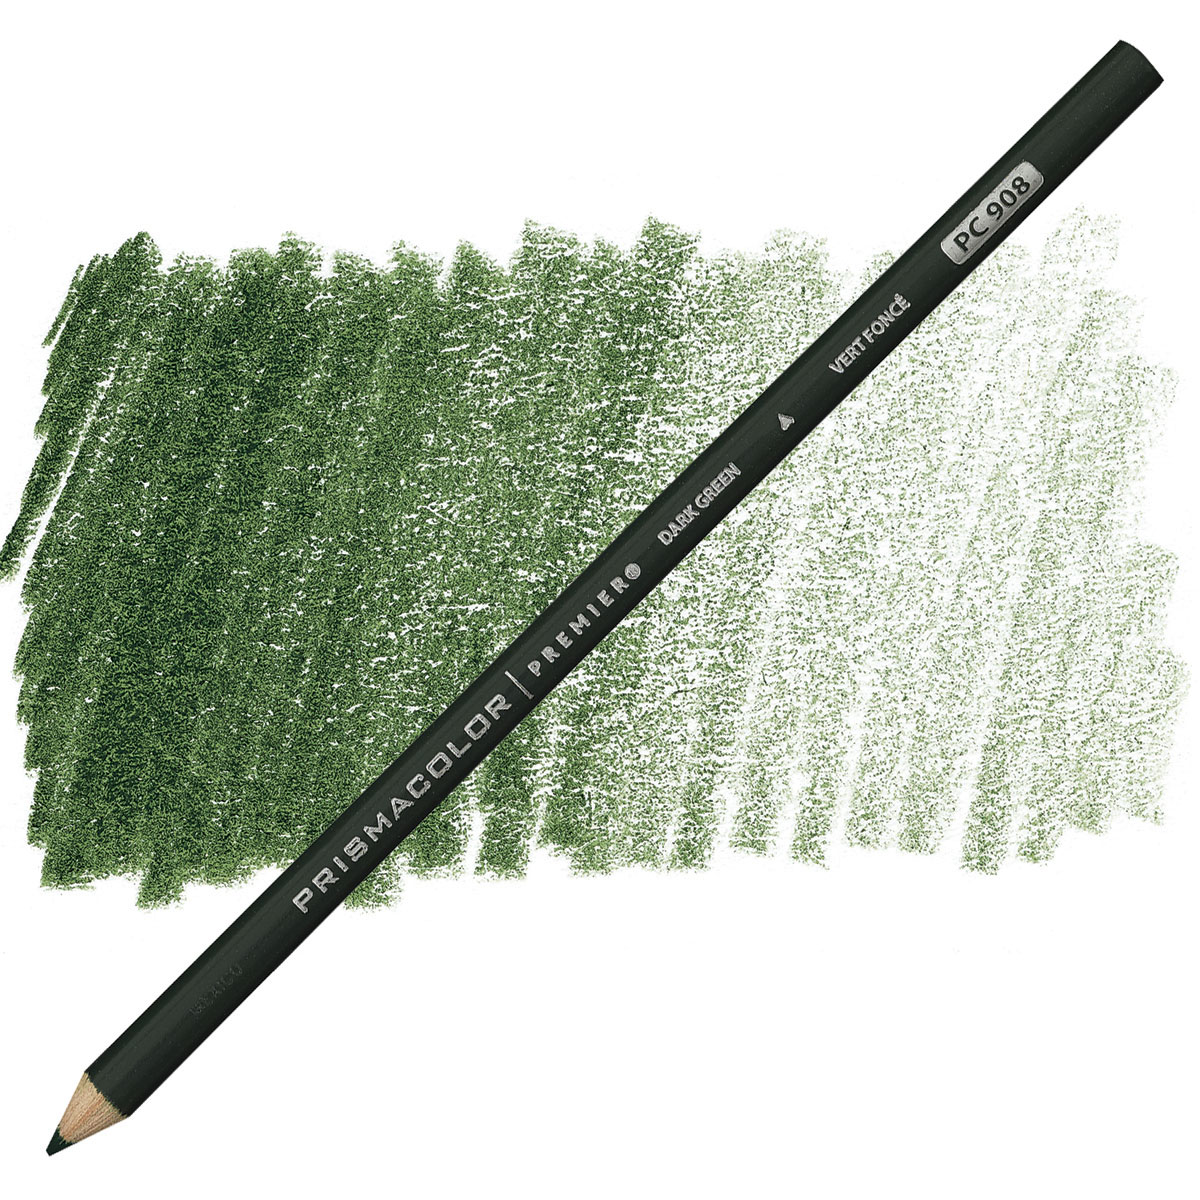 Prismacolor Premier Colored Pencil - Dark Green